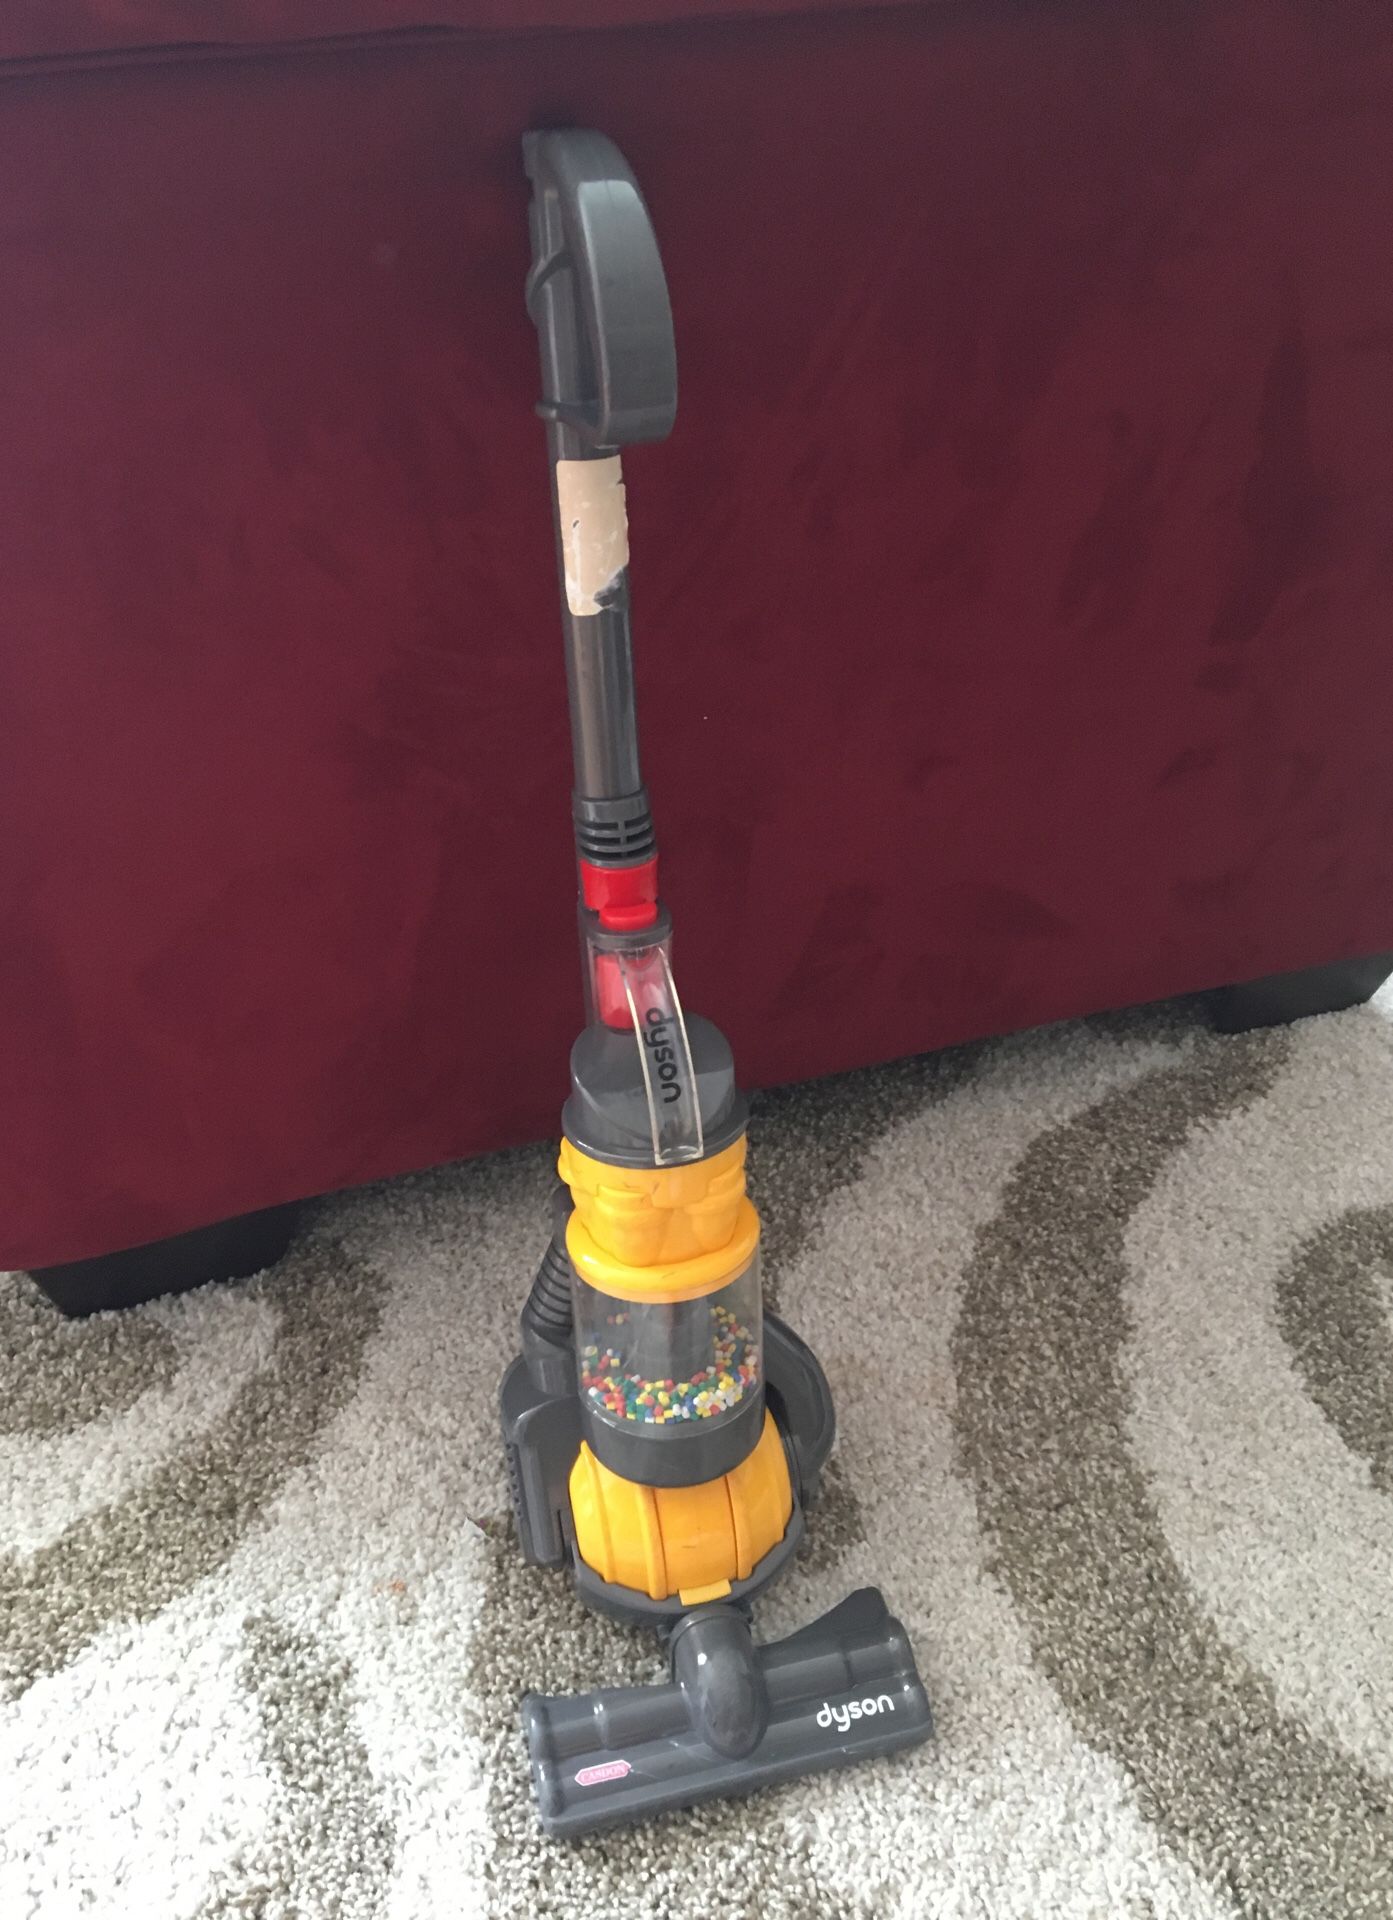 Toy dyson vacuum